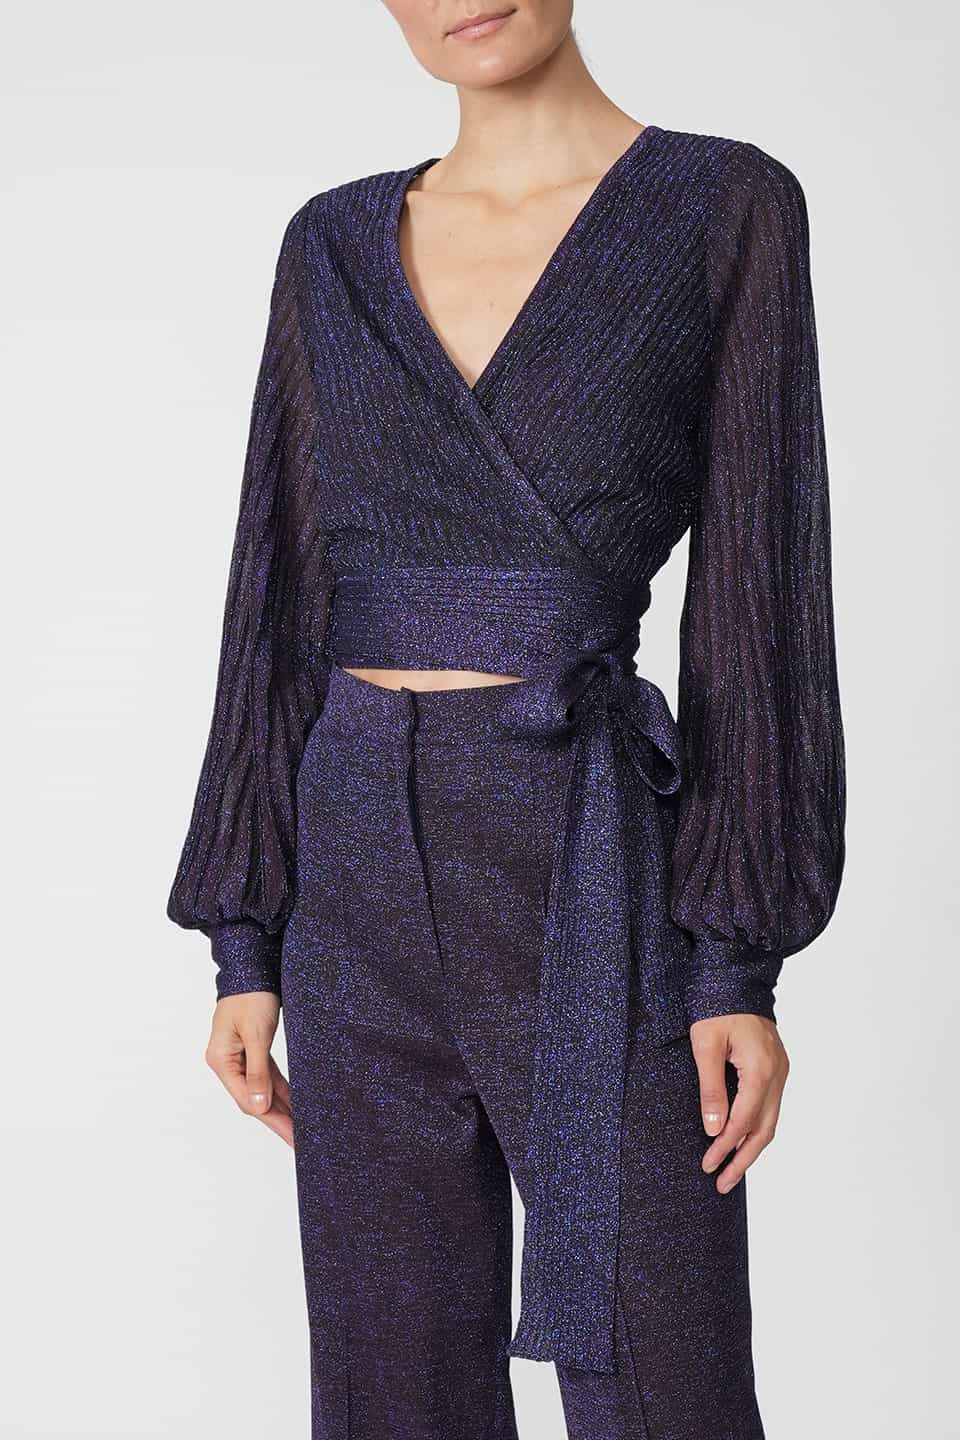 Shop online trendy Purple Women long sleeve from Kukhareva London Fashion designer. Product gallery 1